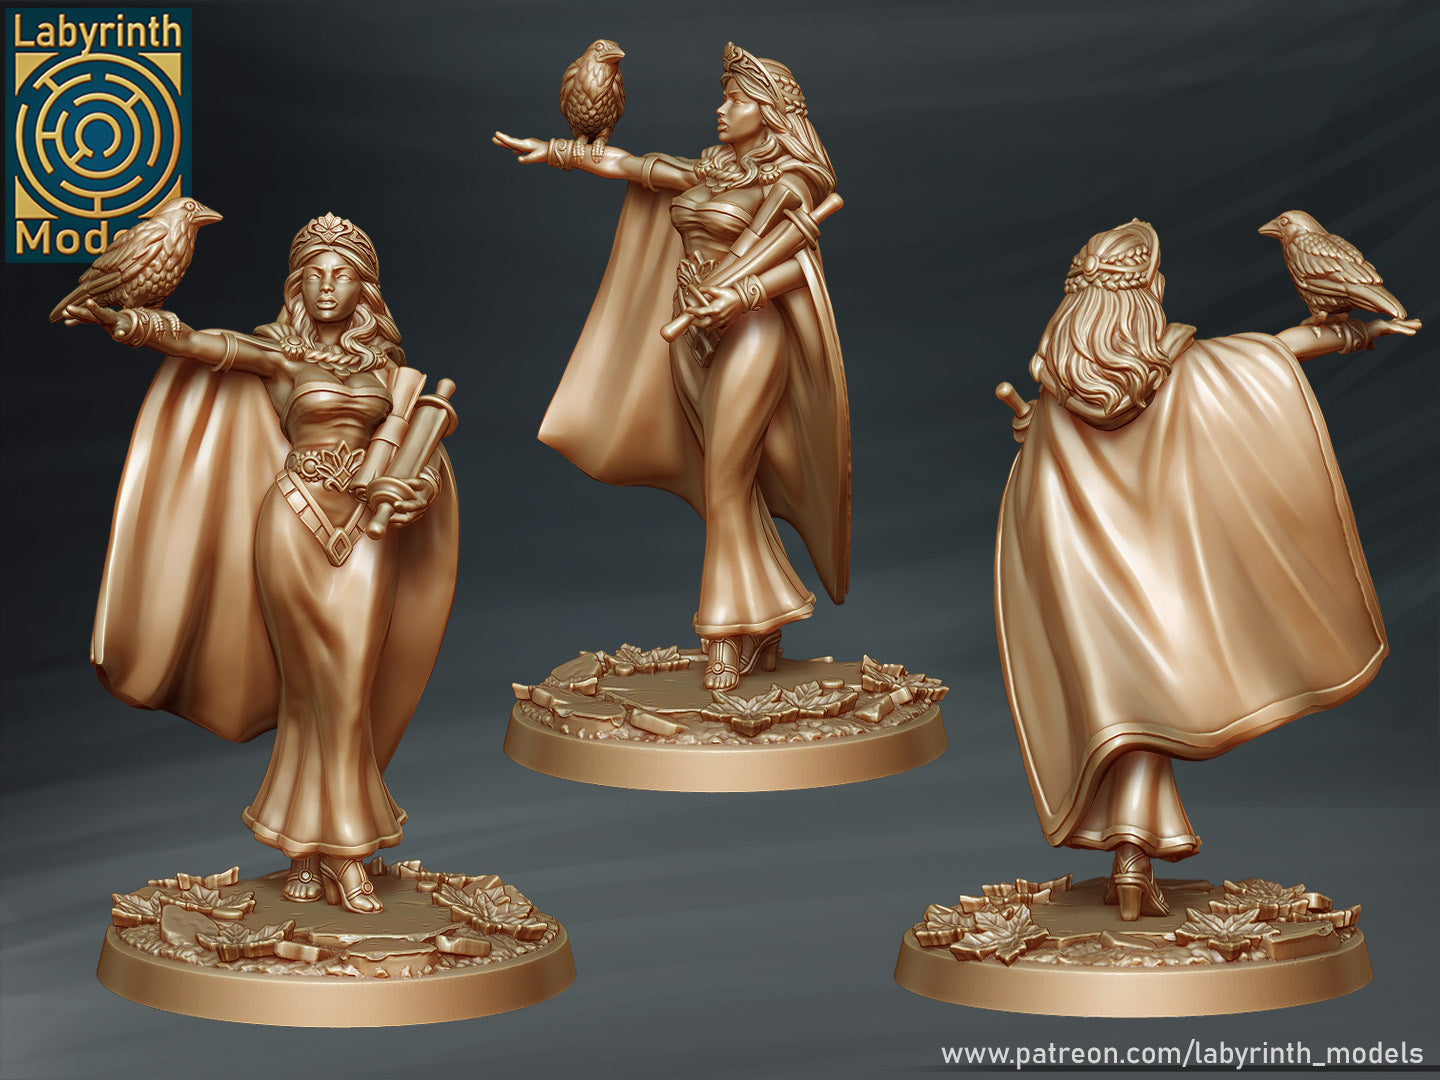 Moirai Priestesses by Labyrinth Models